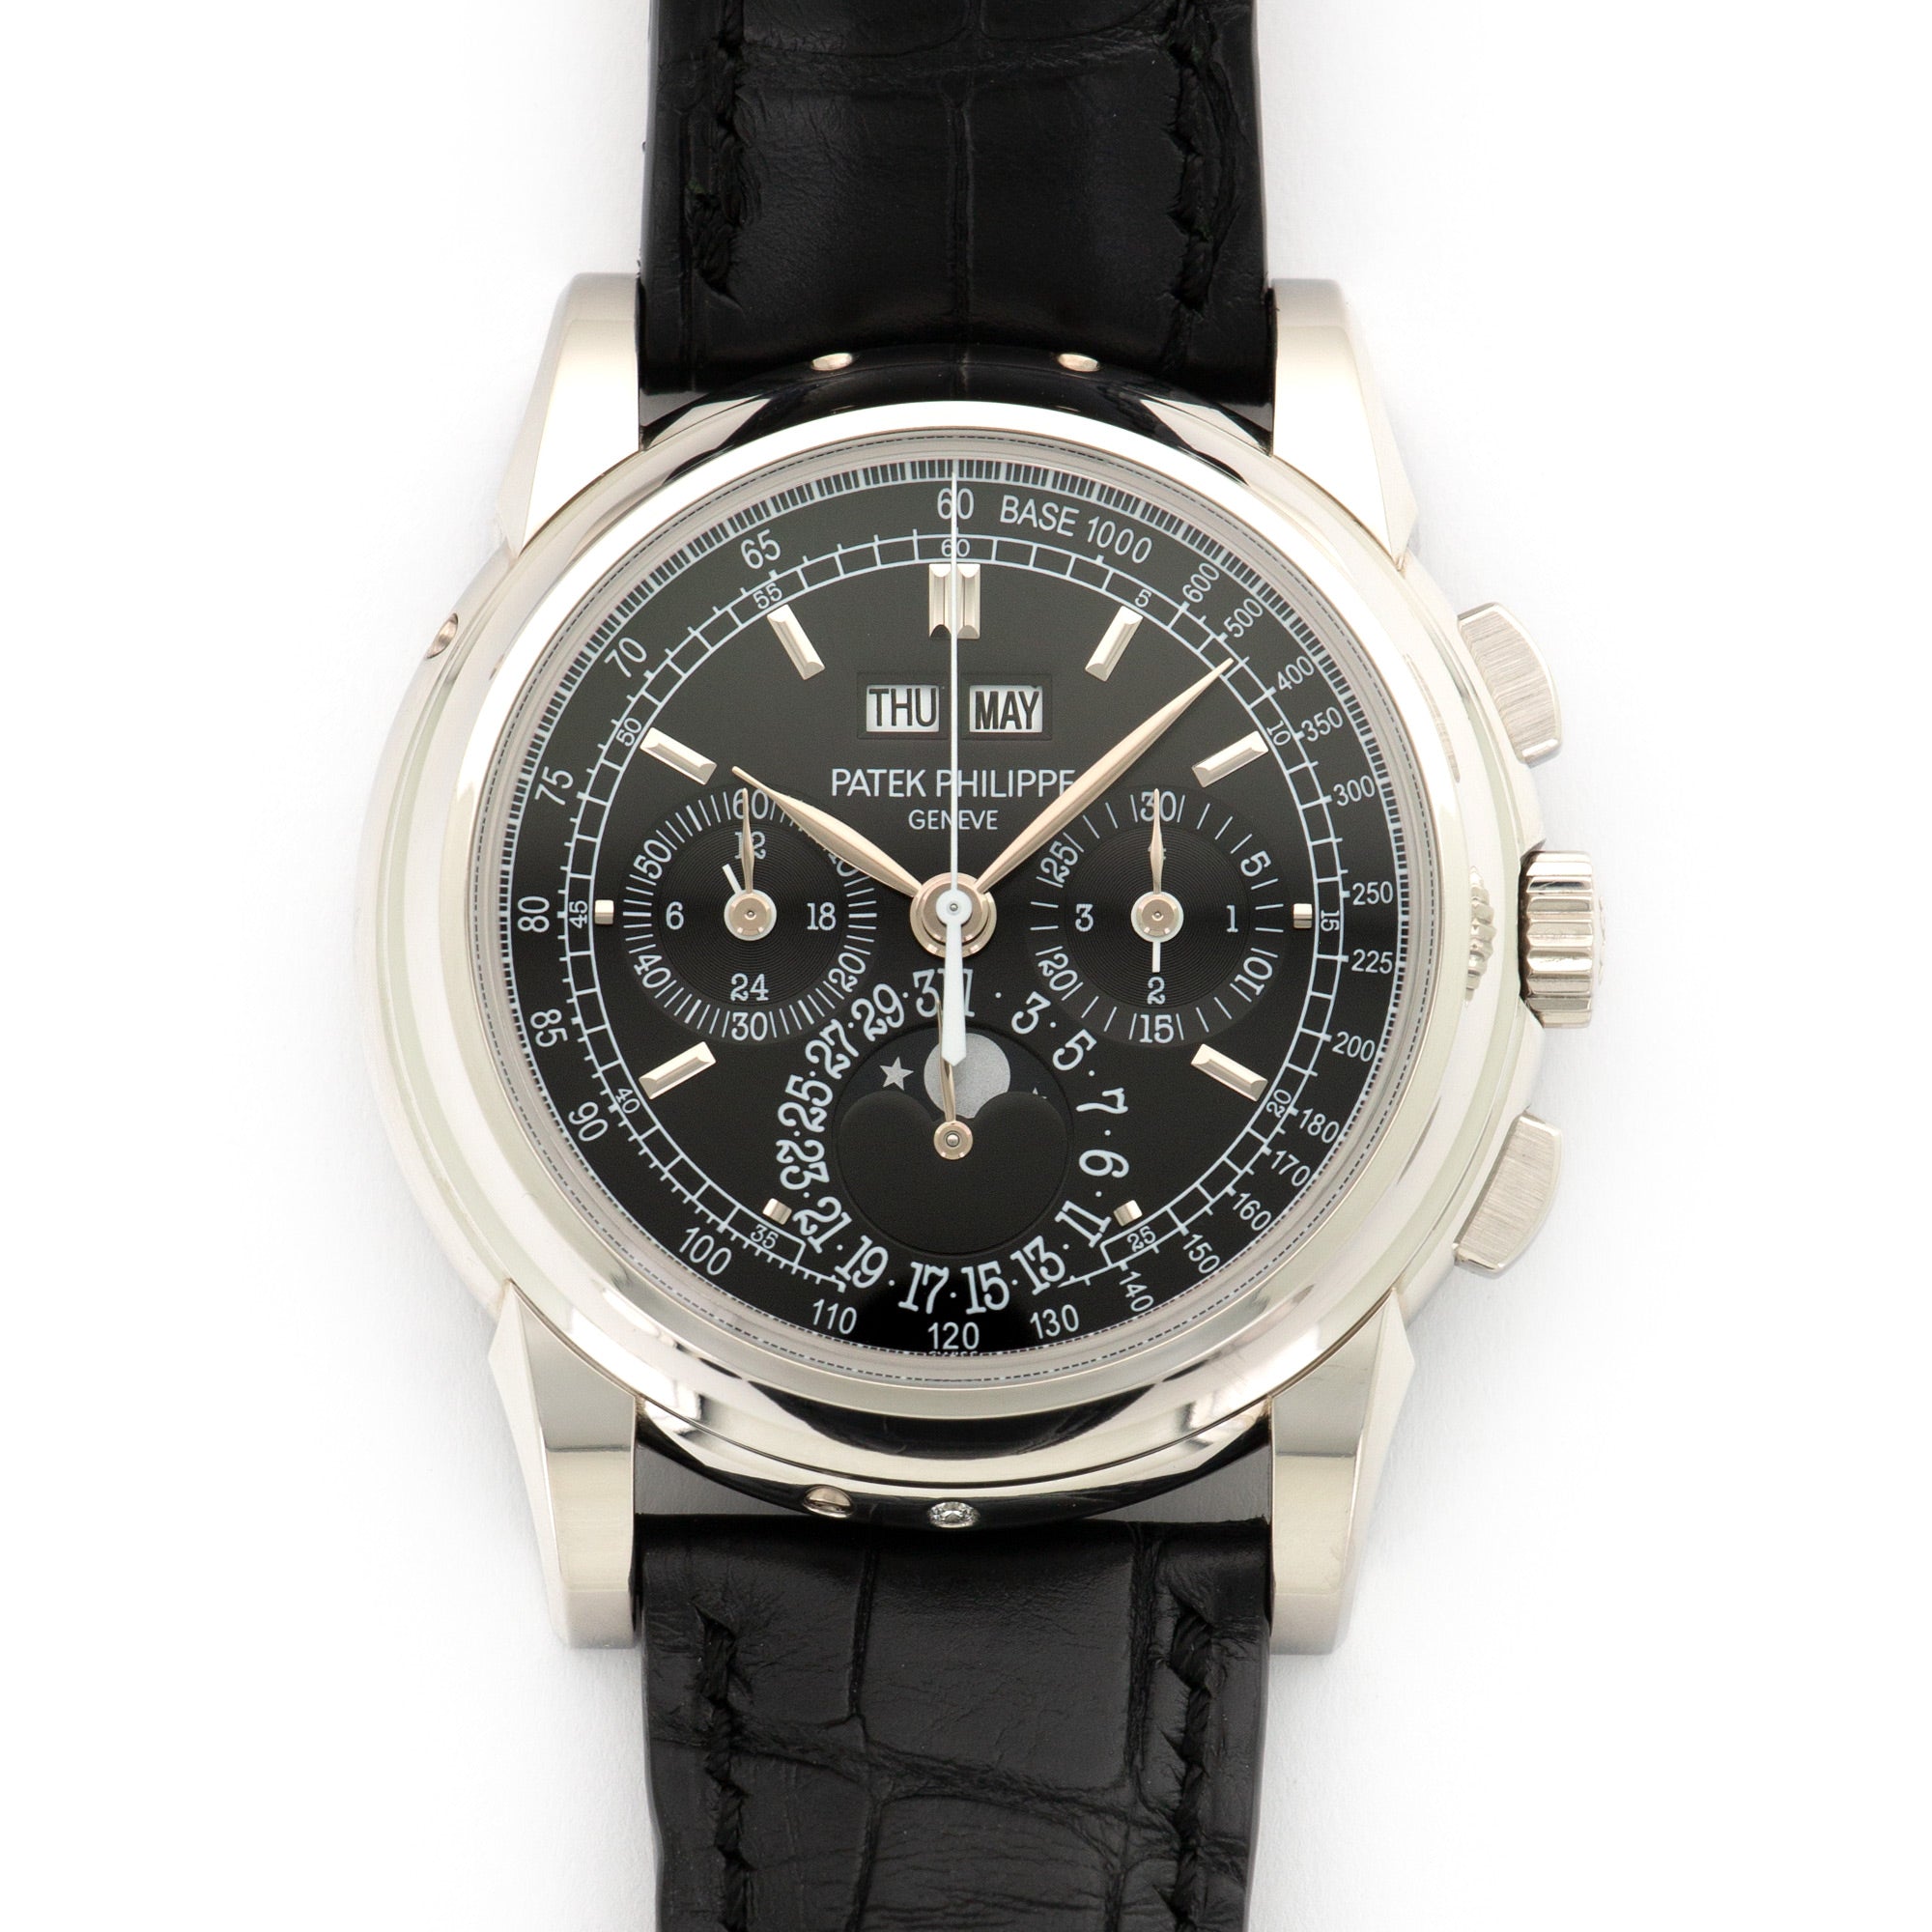 Patek Philippe - Patek Philippe Platinum Perpetual Calendar Chrono Watch Ref. 5970 - The Keystone Watches